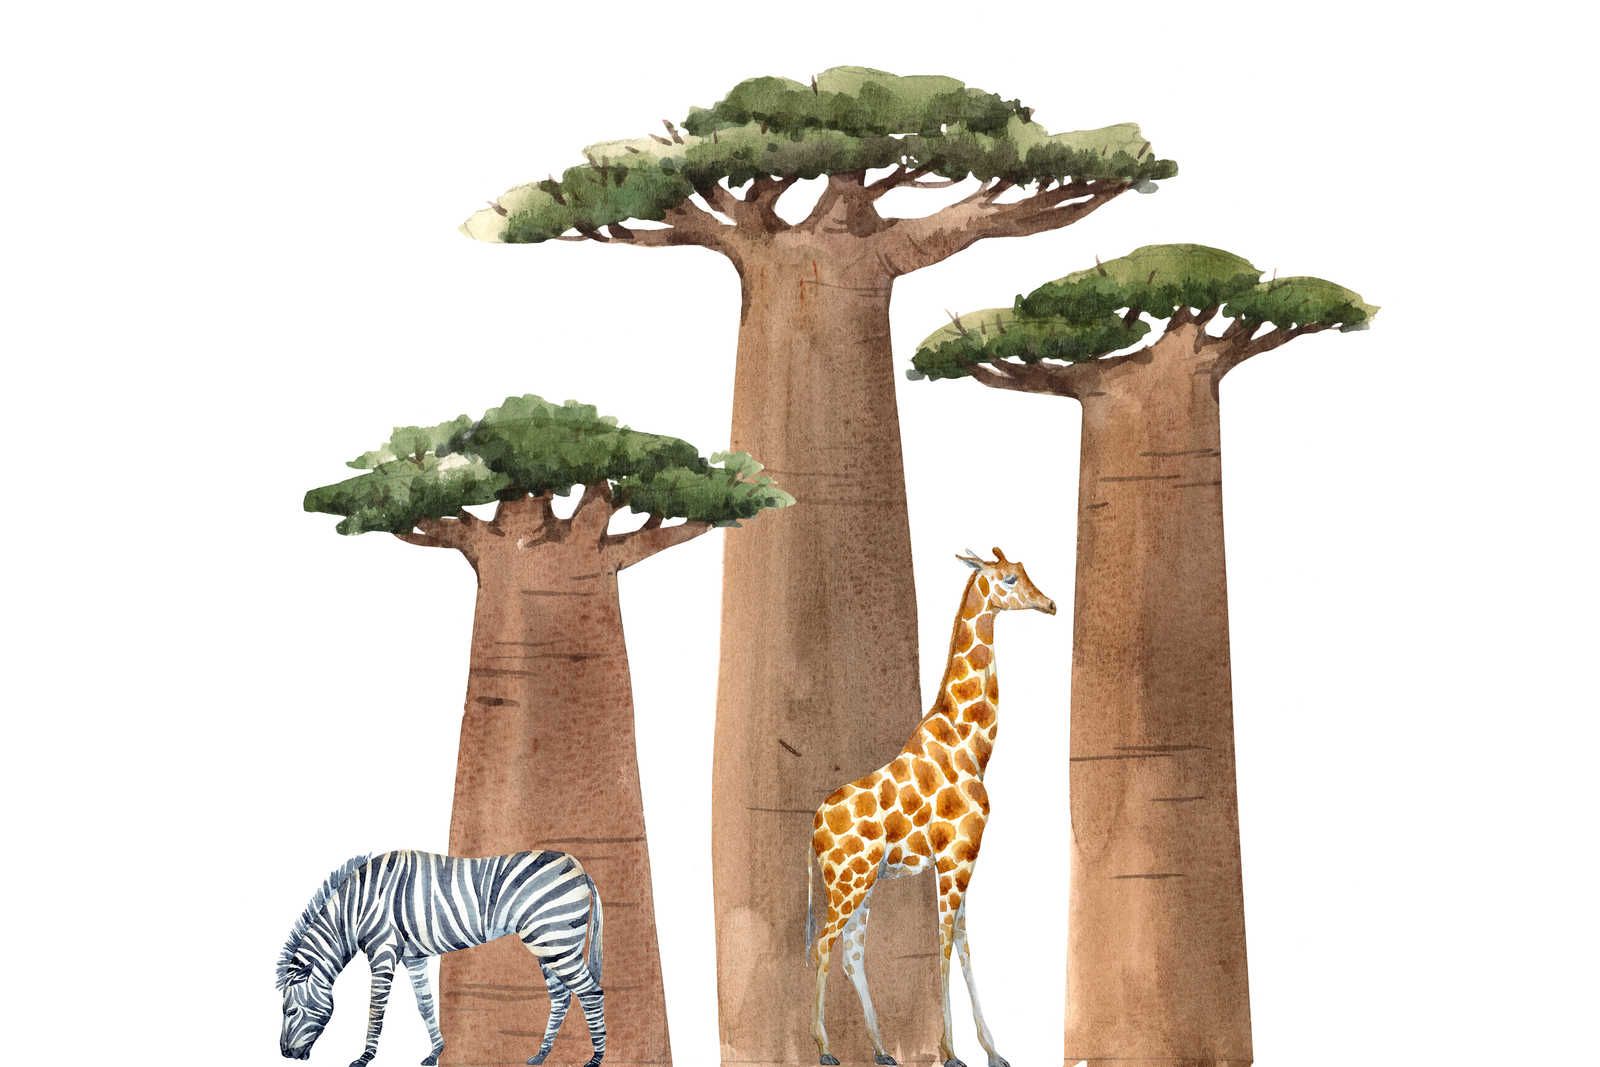             Tela Savana con Giraffa e Zebra - 90 cm x 60 cm
        